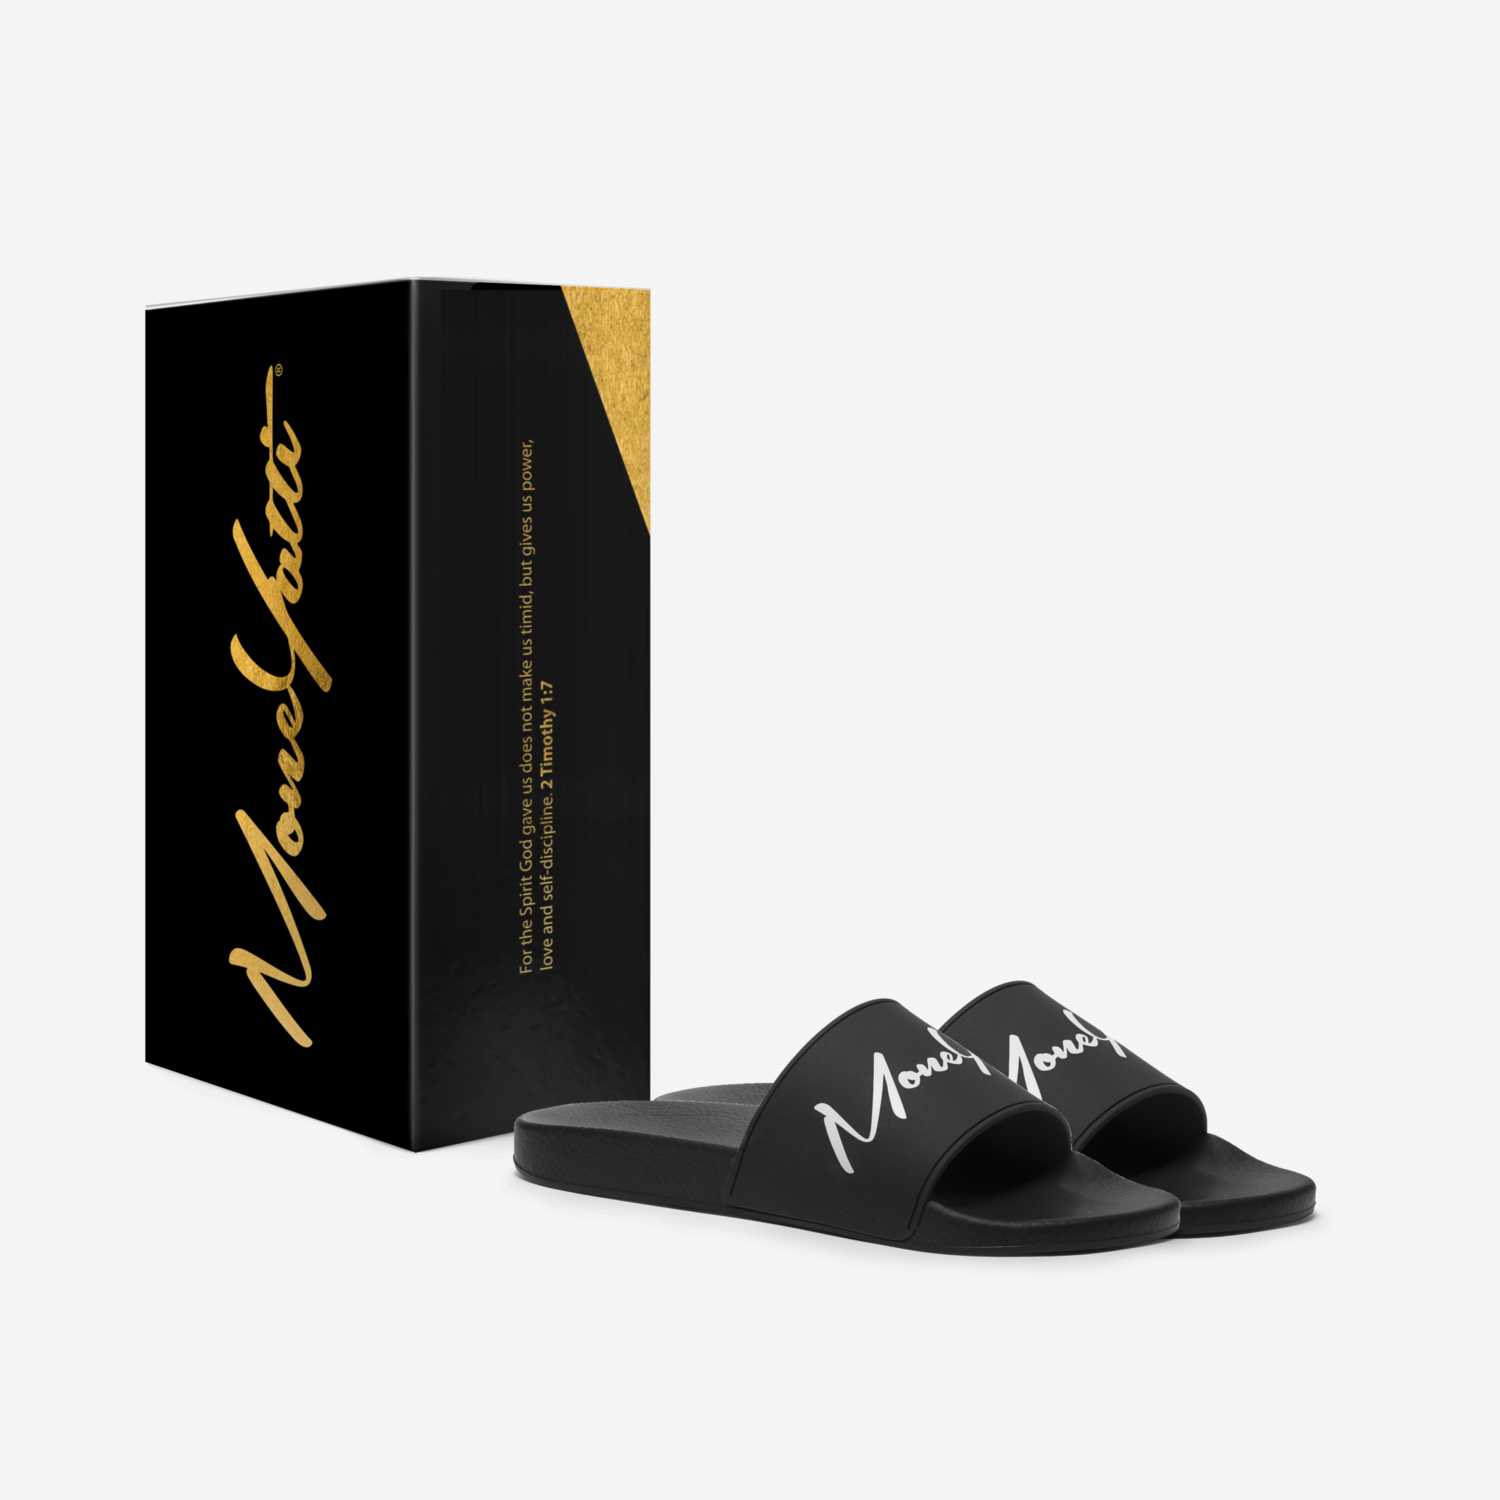 MONEYATTI SLIDES 001 custom made in Italy shoes by Moneyatti Brand | Box view